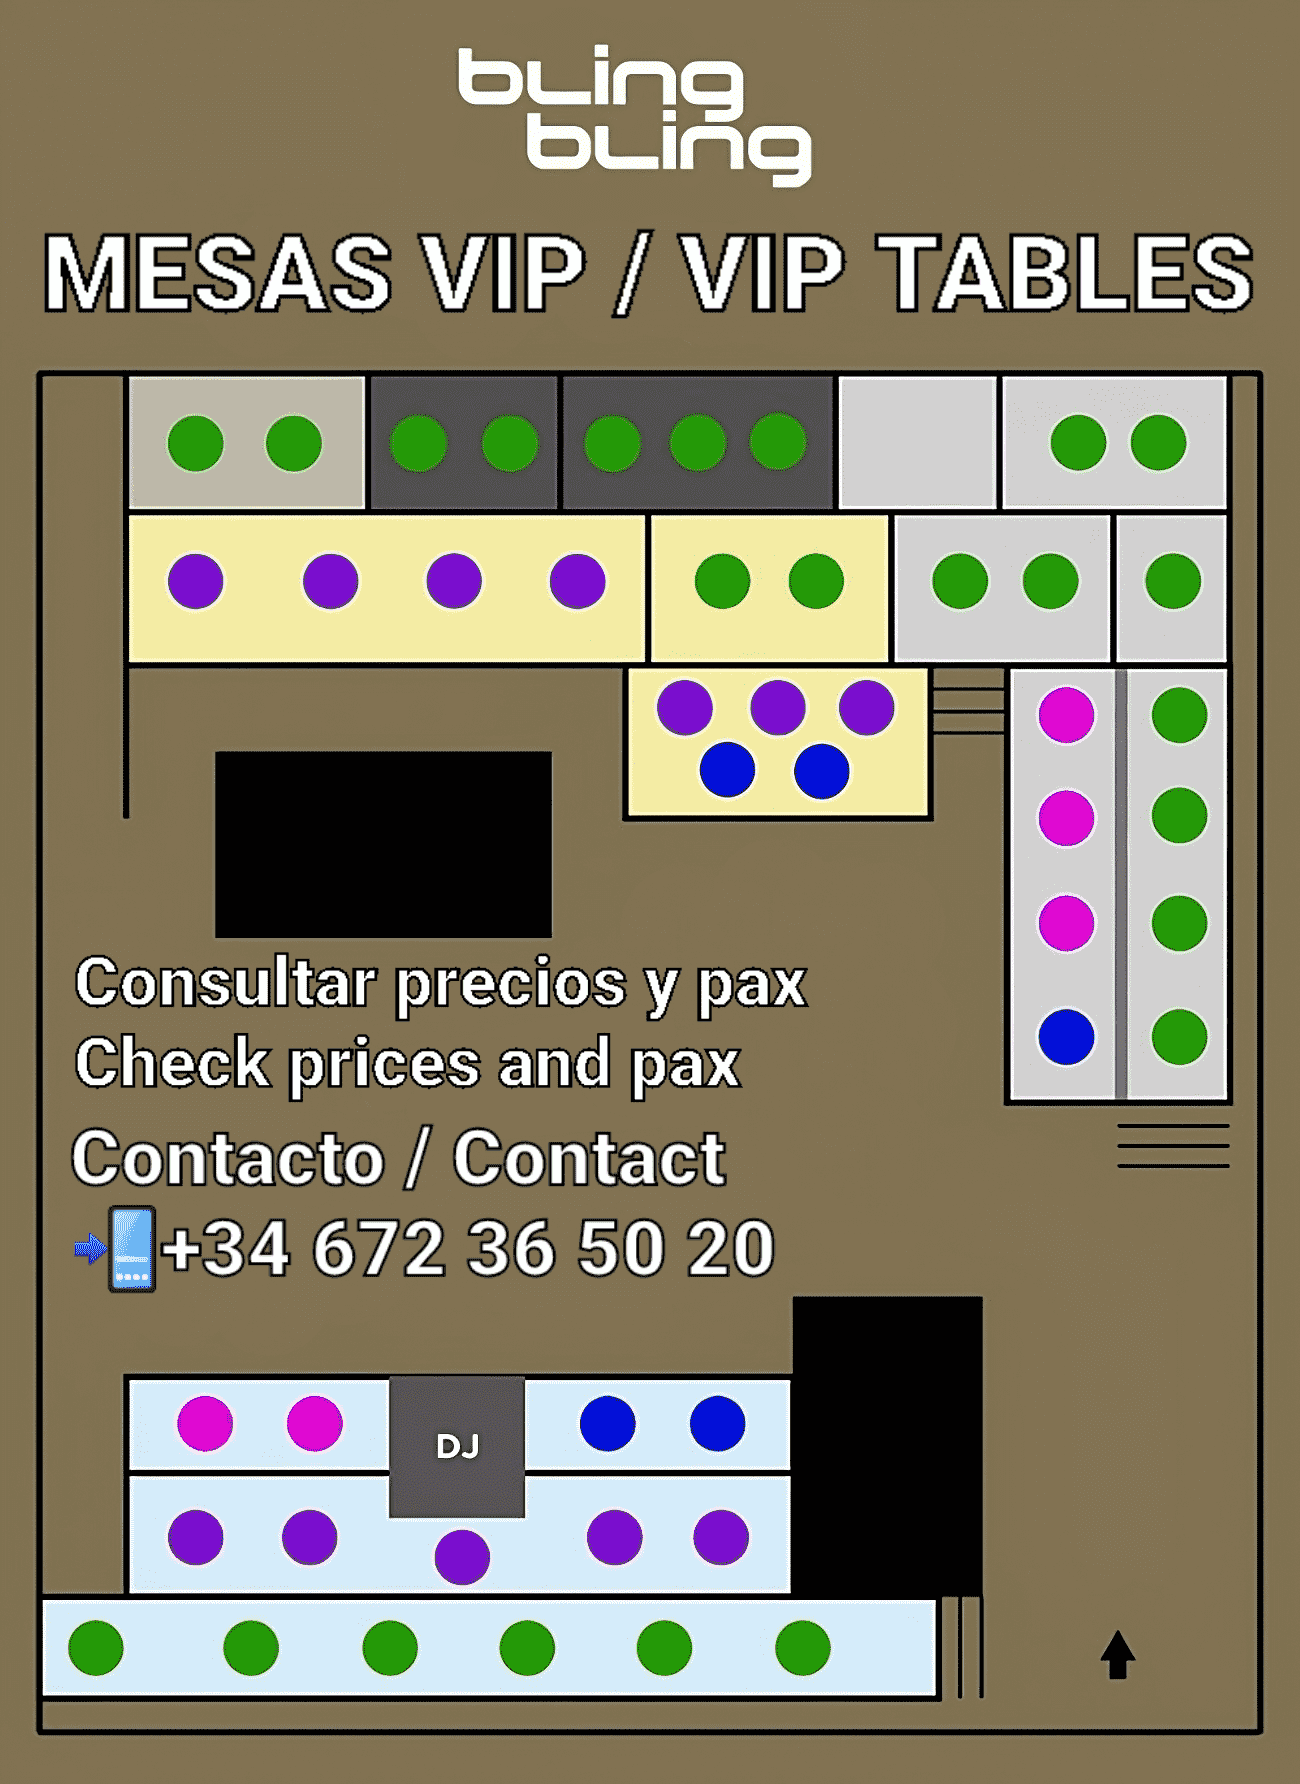 Bling Bling Barcelona VIP Table Booking